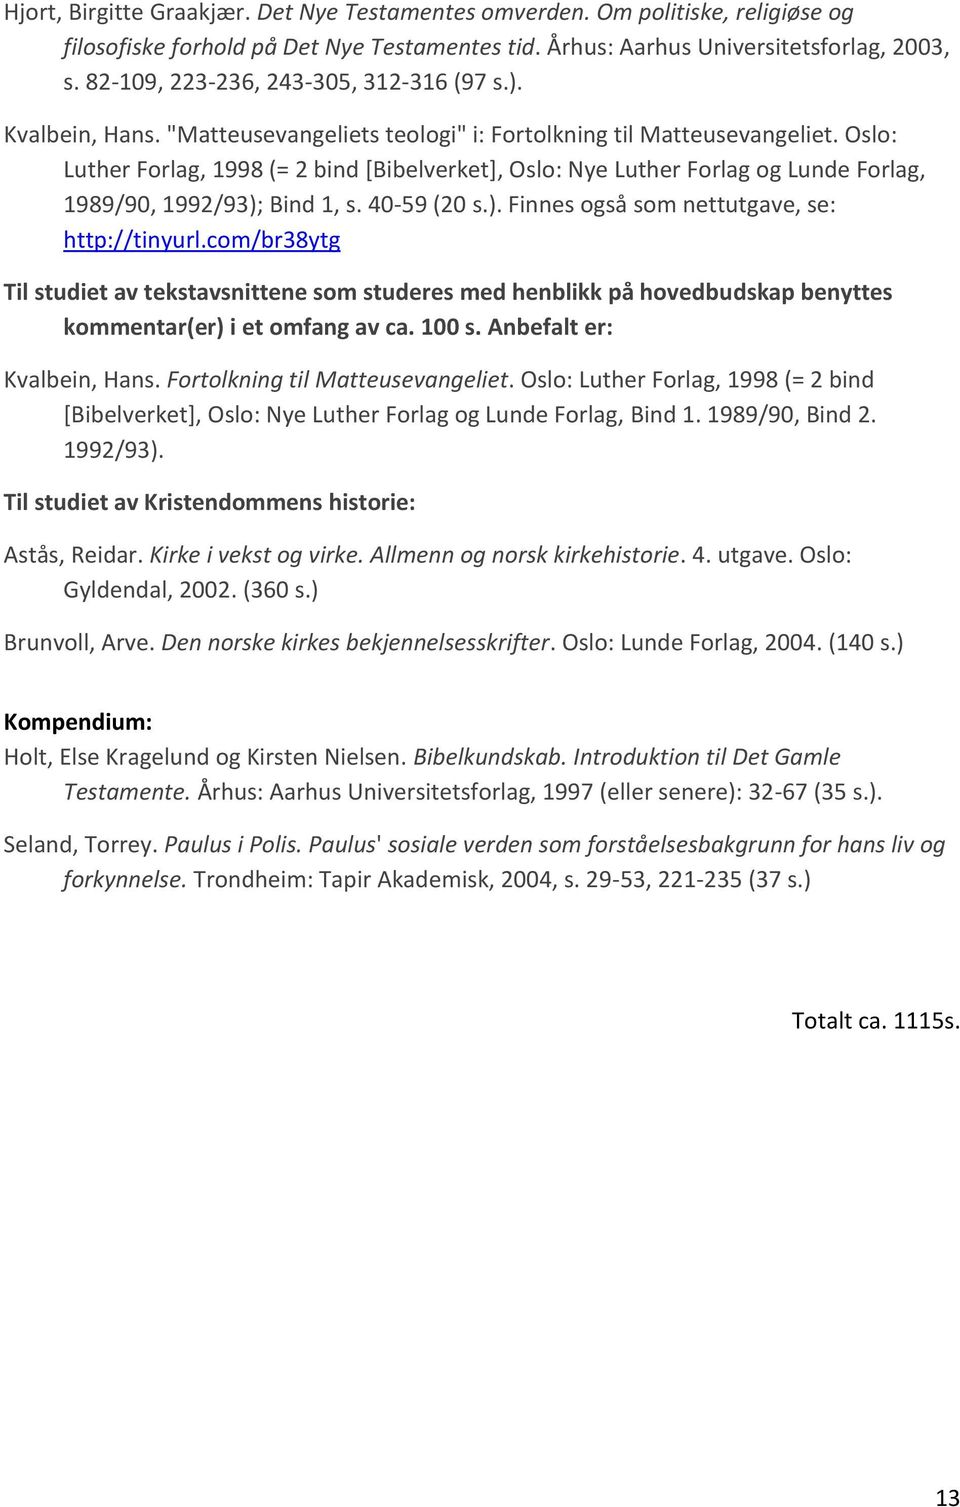 Oslo: Luther Forlag, 1998 (= 2 bind [Bibelverket], Oslo: Nye Luther Forlag og Lunde Forlag, 1989/90, 1992/93); Bind 1, s. 40-59 (20 s.). Finnes også som nettutgave, se: http://tinyurl.